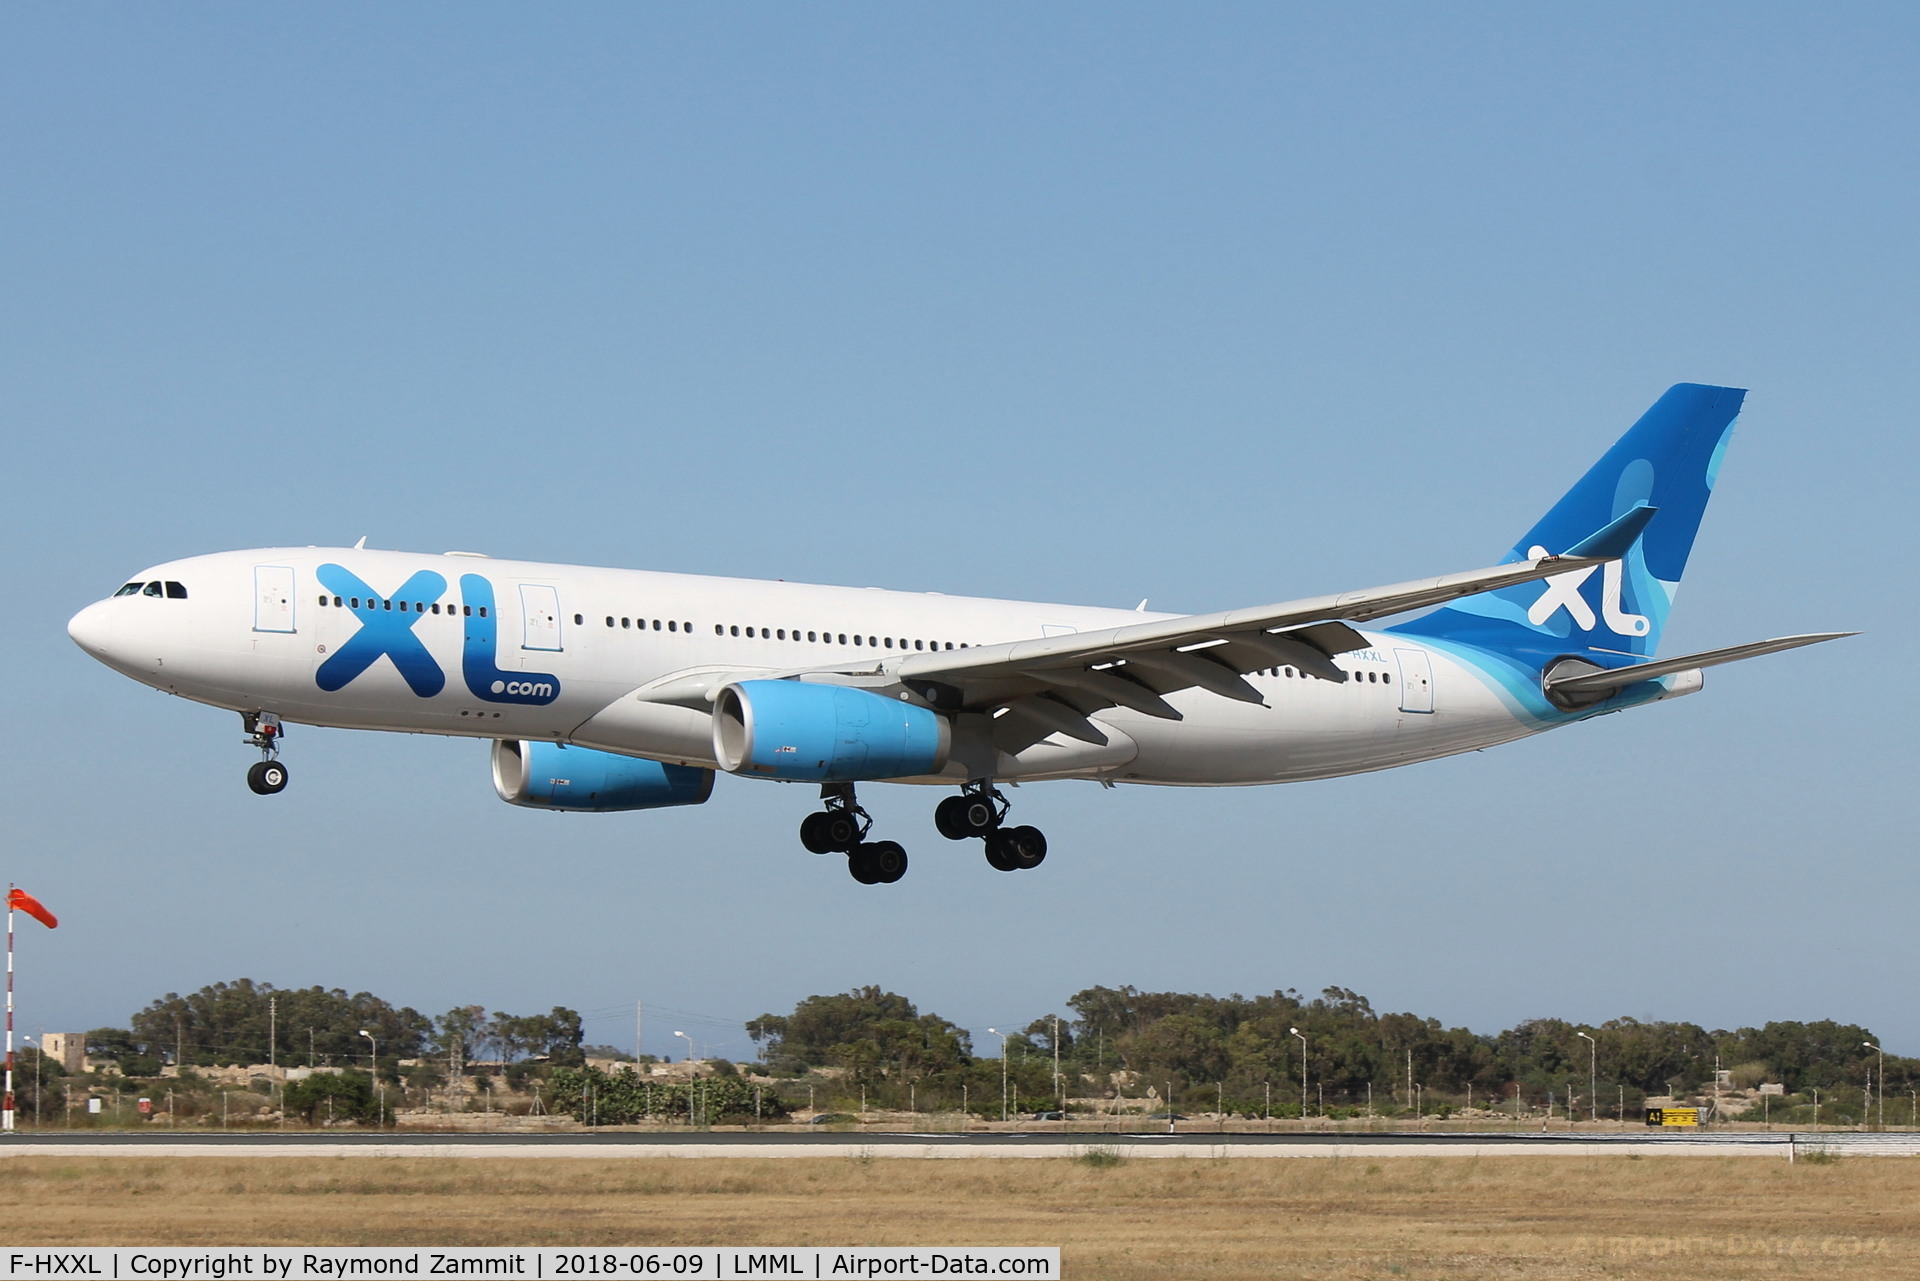 F-HXXL, 2004 Airbus A330-243 C/N 597, A330 F-HXXL XL Airways